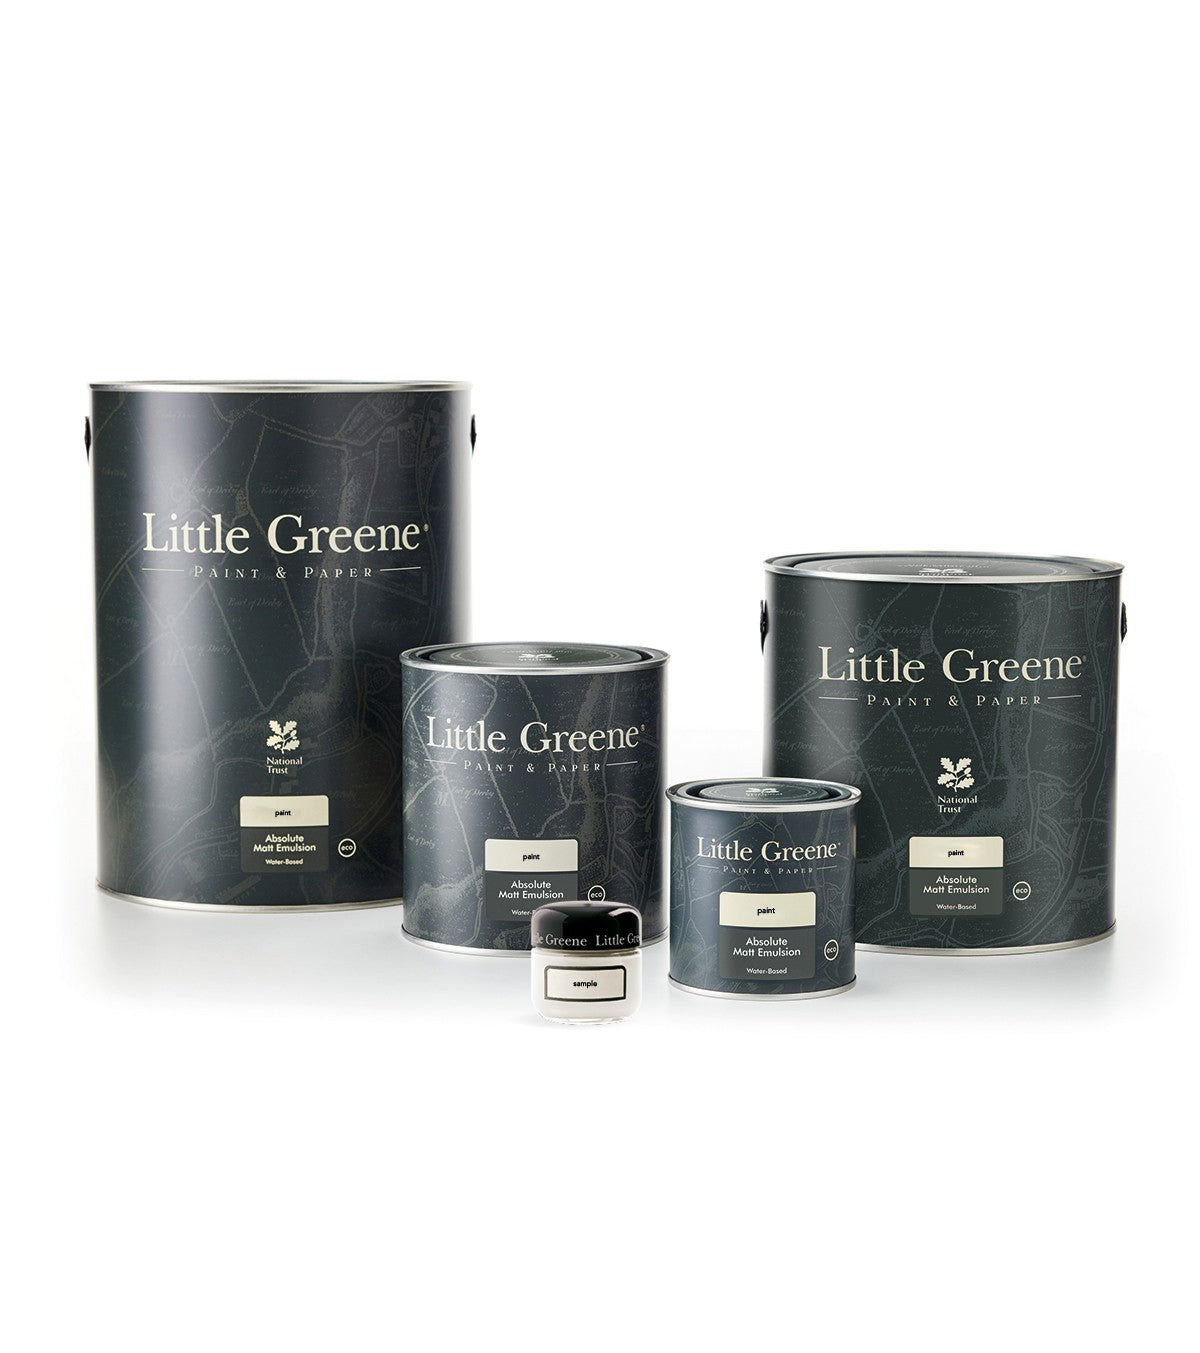 Little Greene Farbe - Citrin (71)